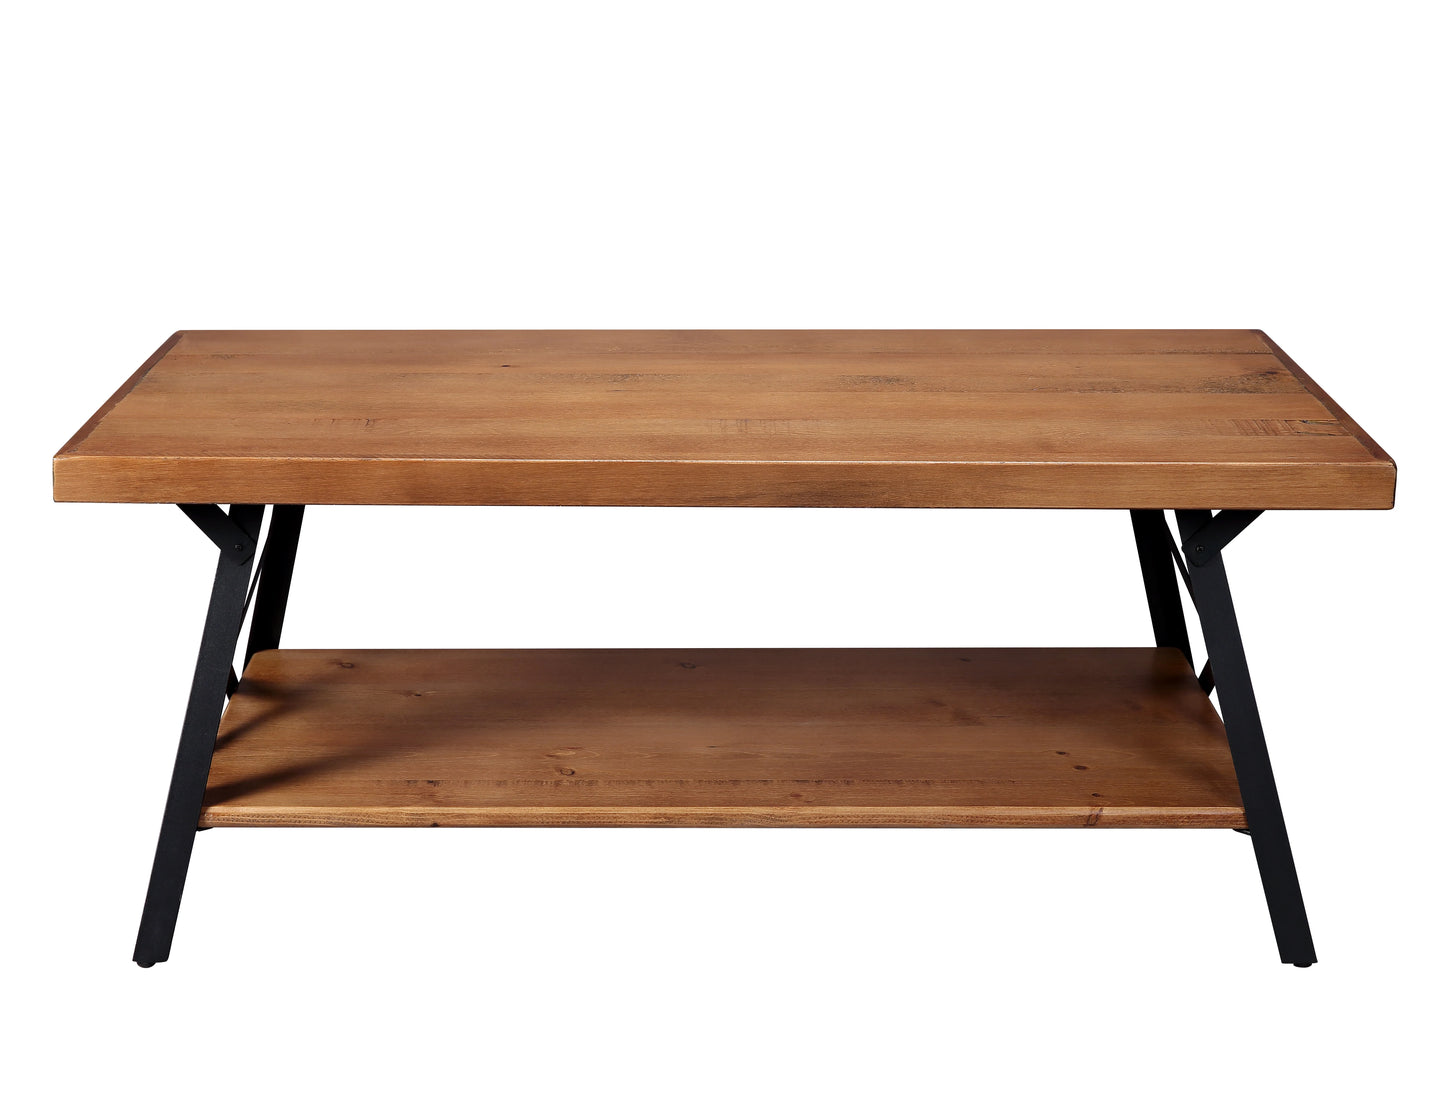 43'' Metal Legs Rustic Coffee Table Solid Wood Tabletop End Table Side Table US Warehouse